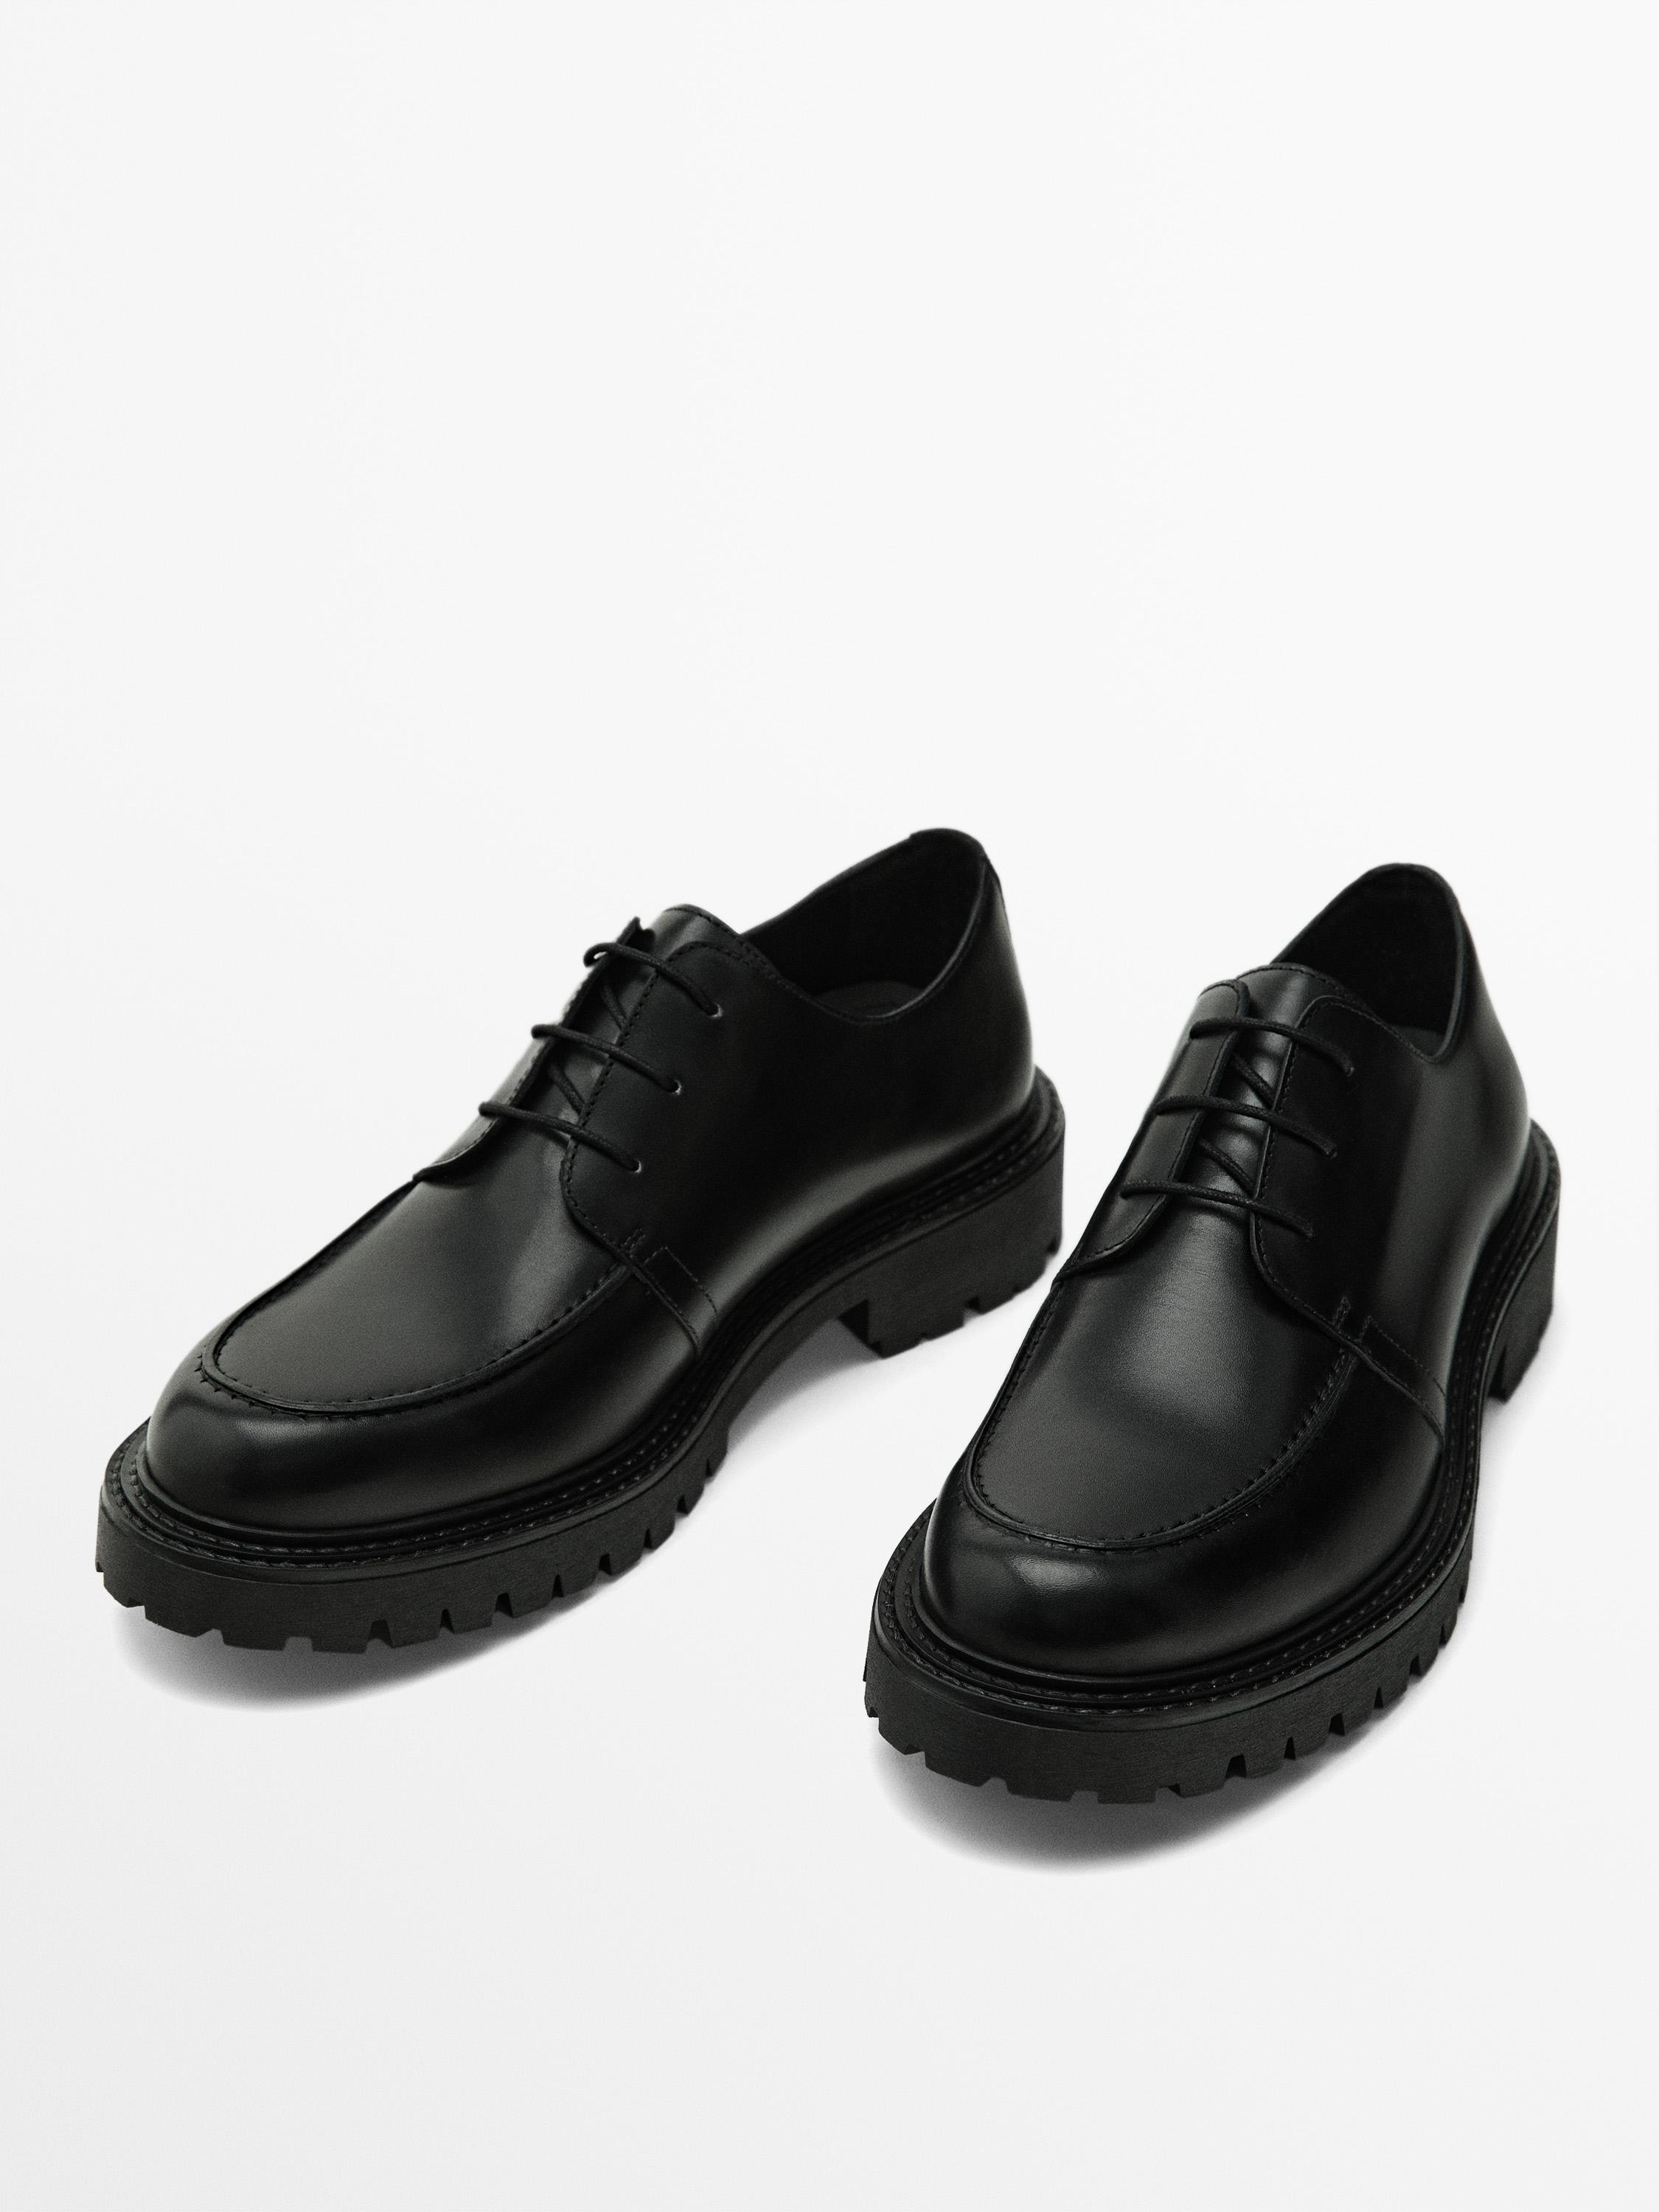 Black moc toe shoes - Black | ZARA United States